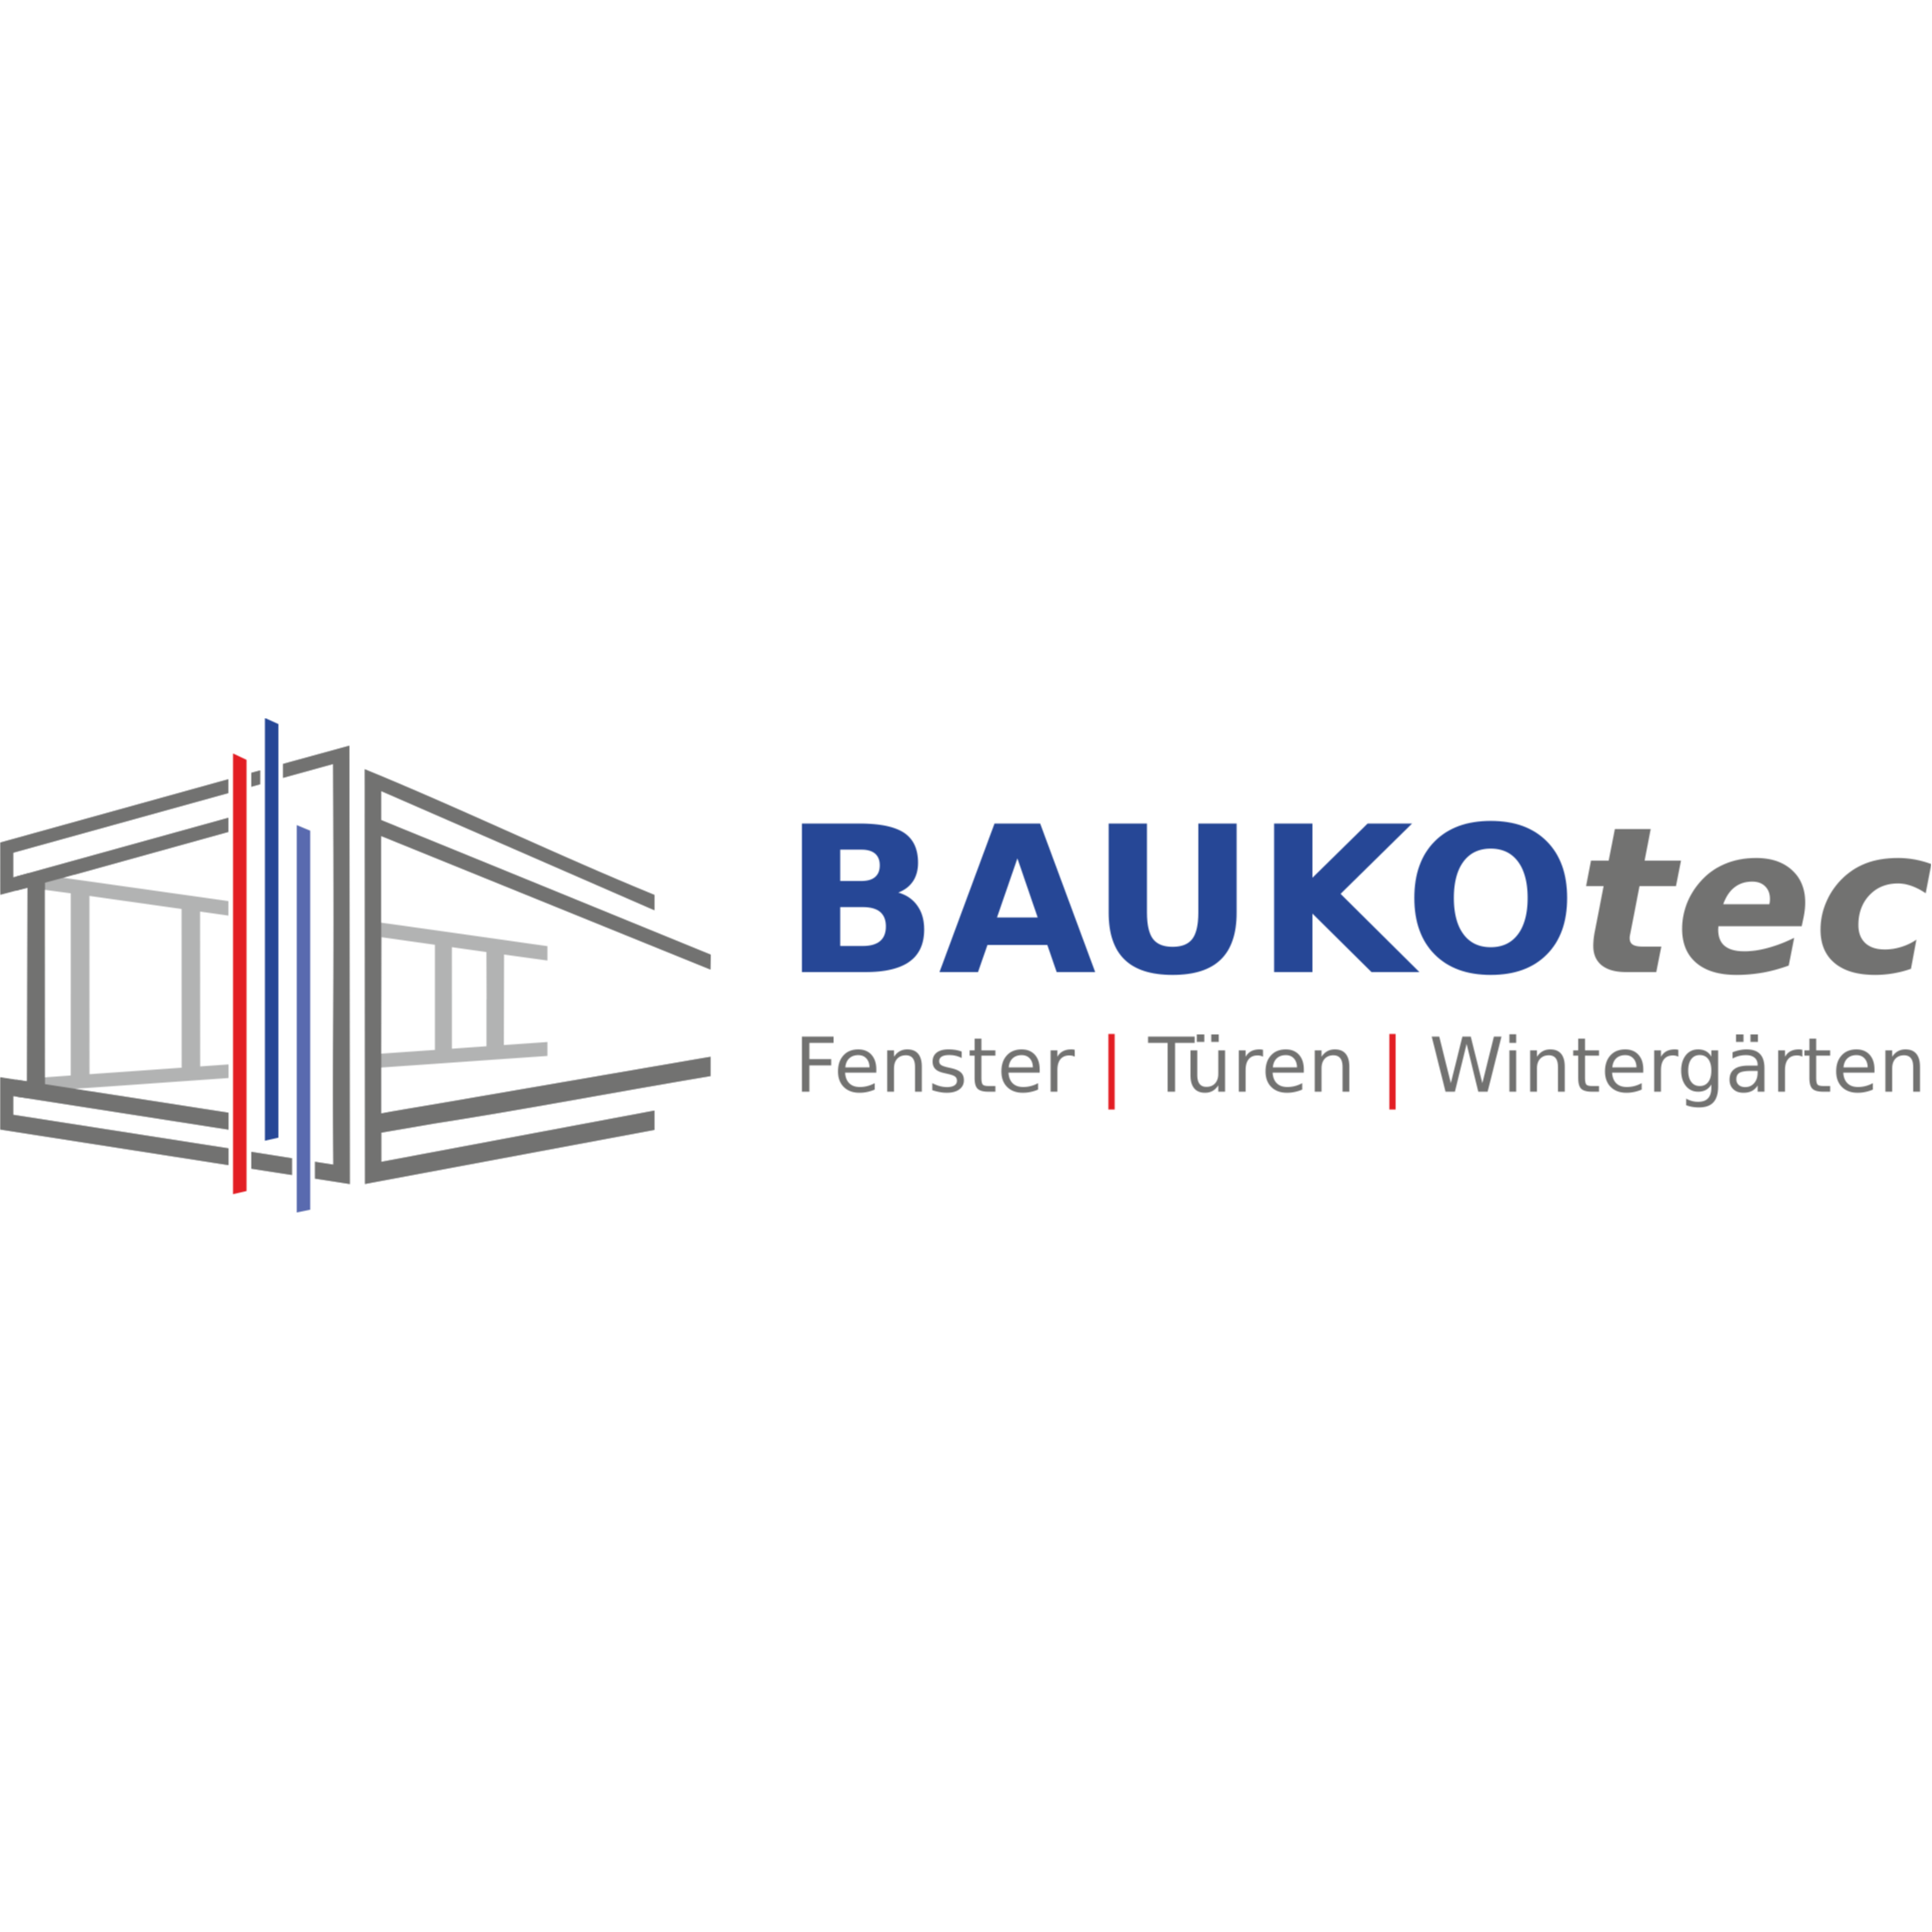 BAUKO-tec GmbH | Fenster, Türen, Wintergärten Logo